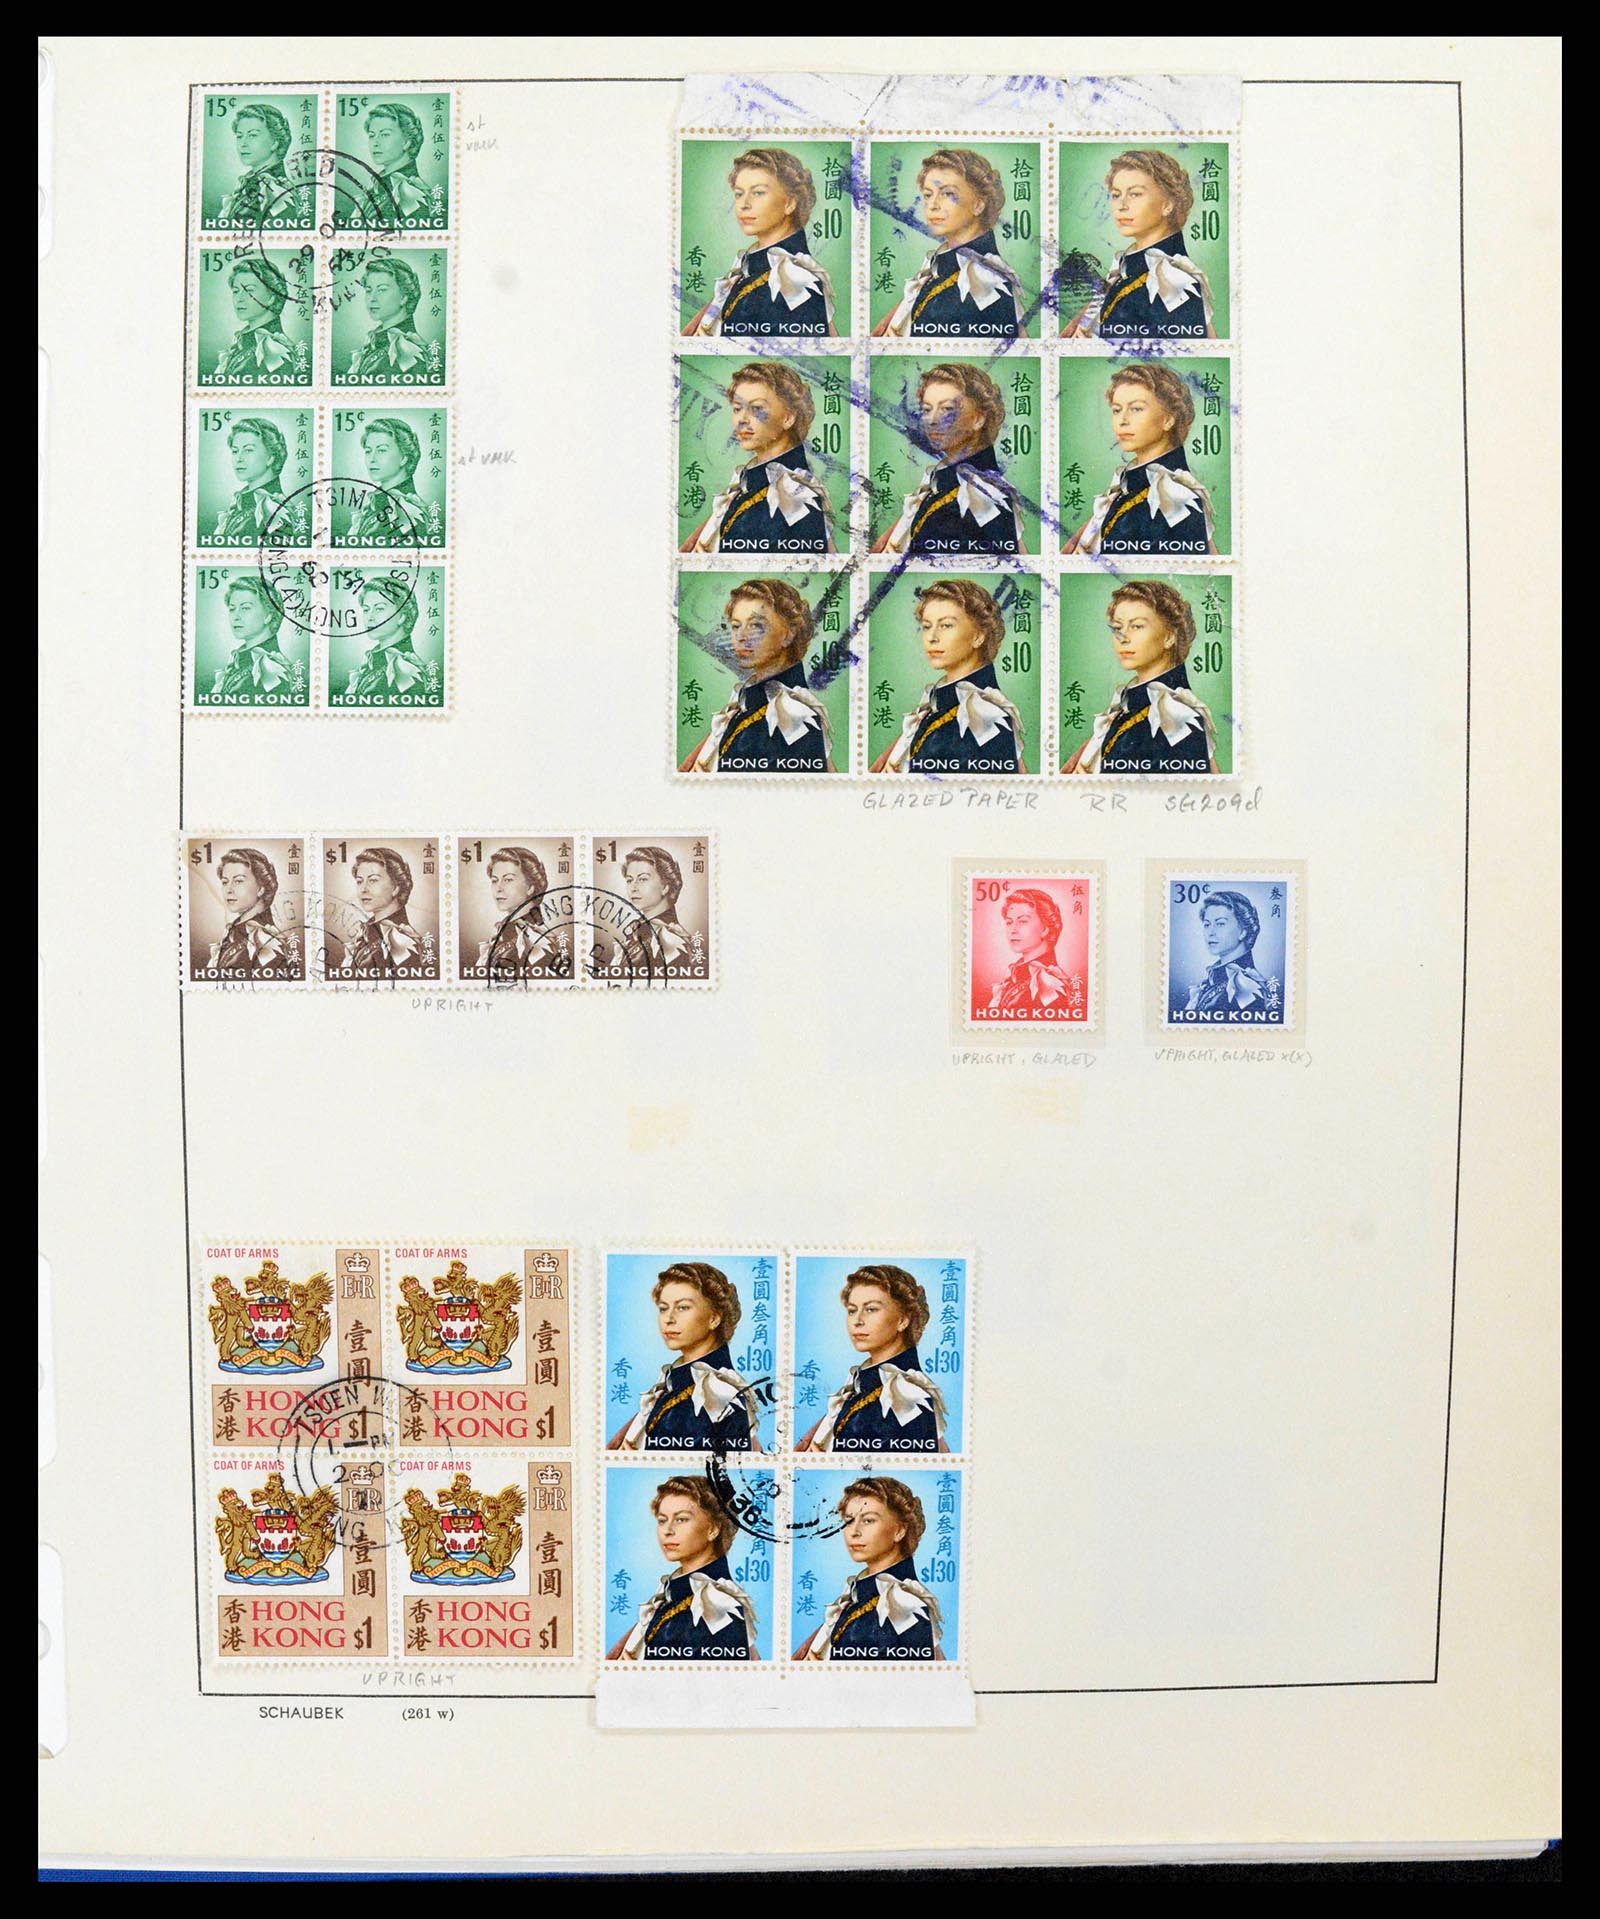 37955 0054 - Stamp collection 37955 Hong Kong supercollection 1862-2007.